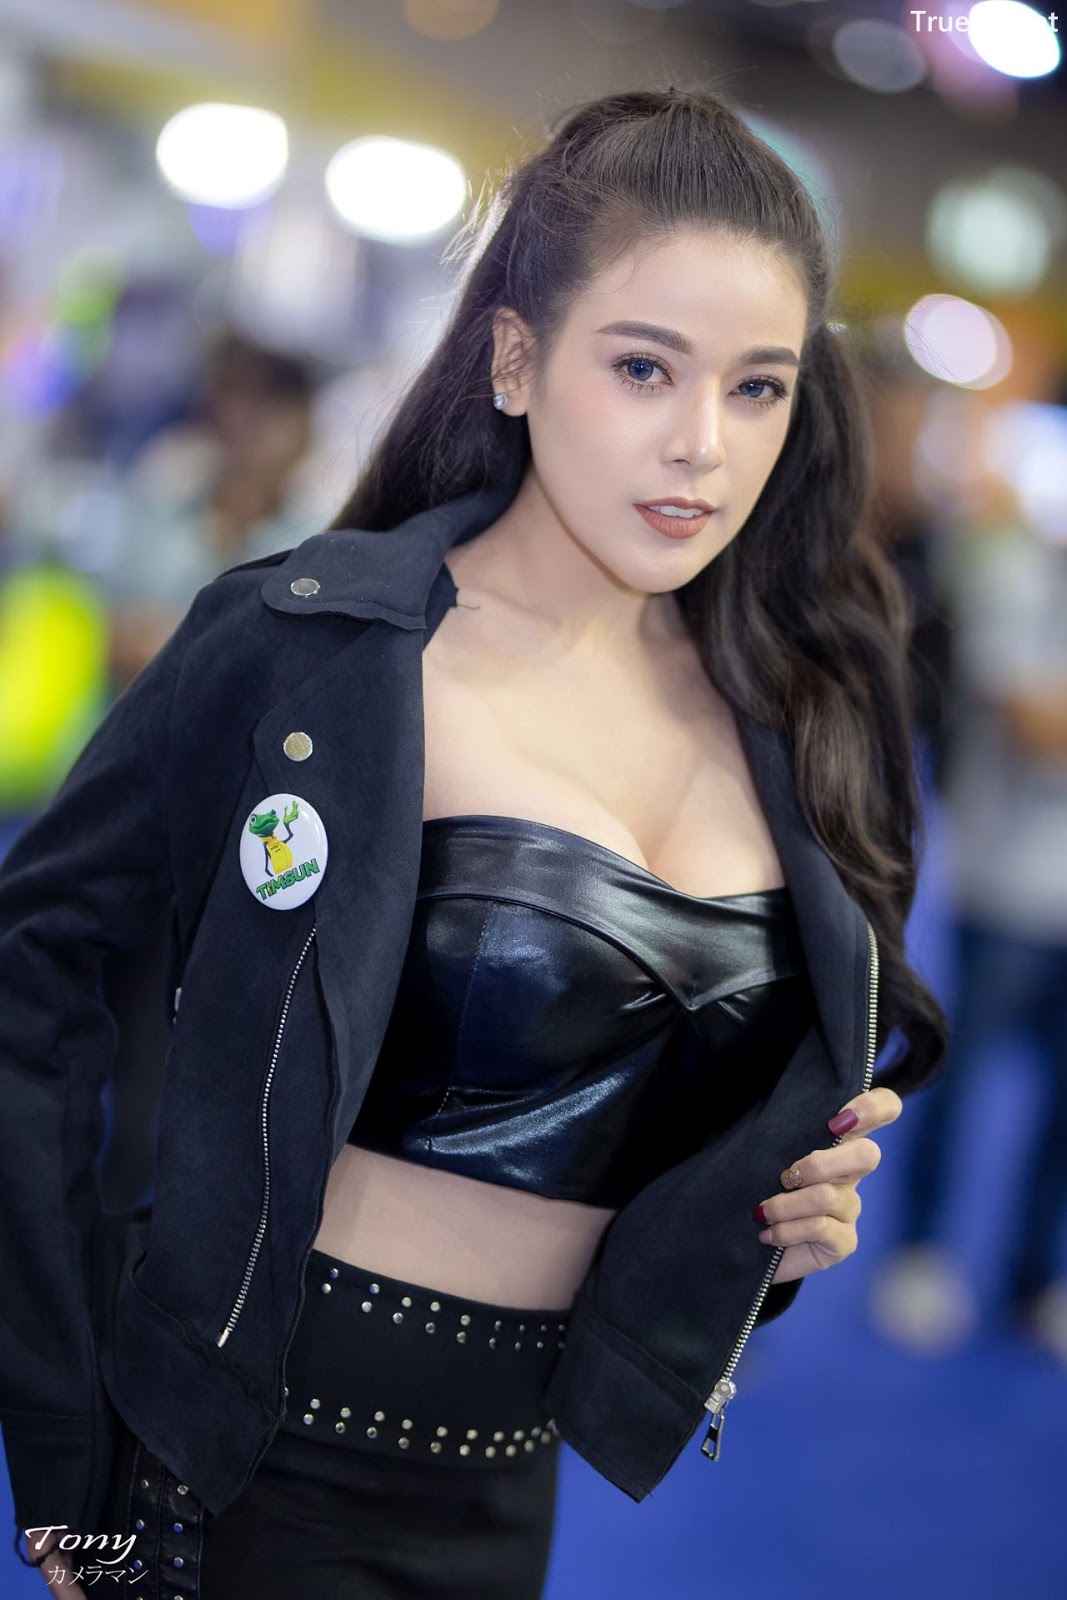 Image-Thailand-Hot-Model-Thai-Racing-Girl-At-Big-Motor-2018-TruePic.net- Picture-100